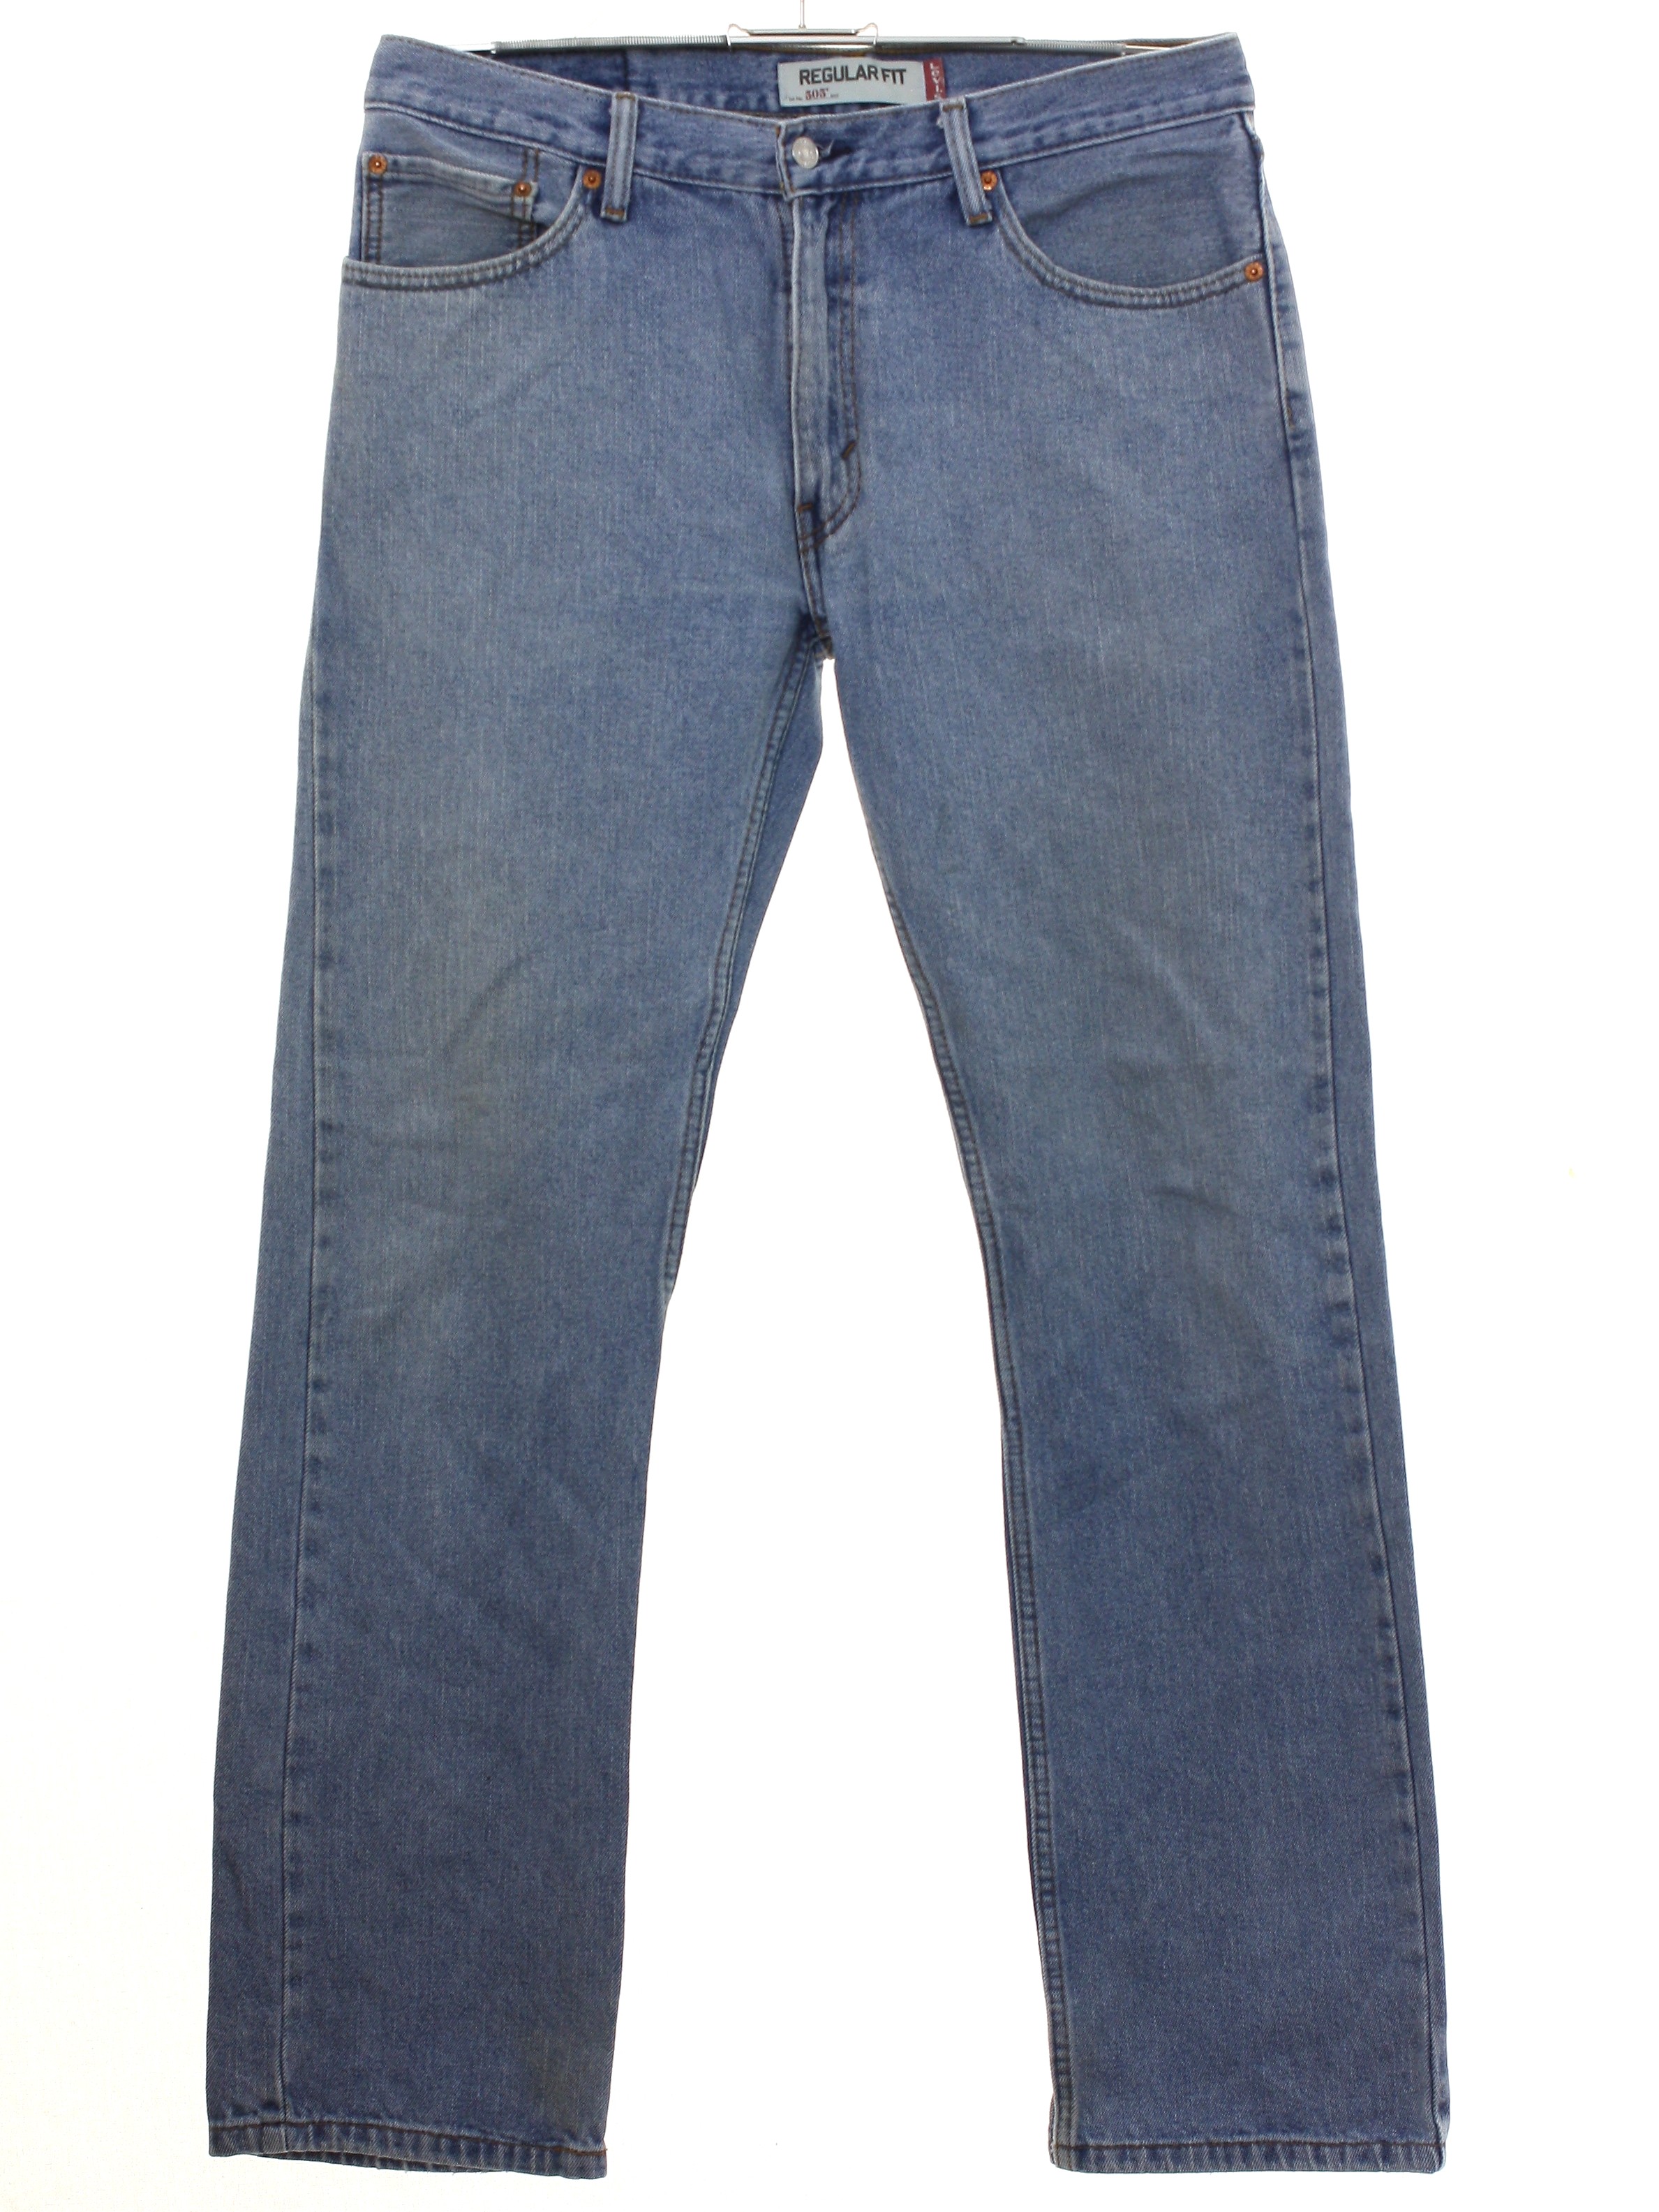 Pants: 90s -Levis 505- Mens faded and worn medium blue cotton denim ...